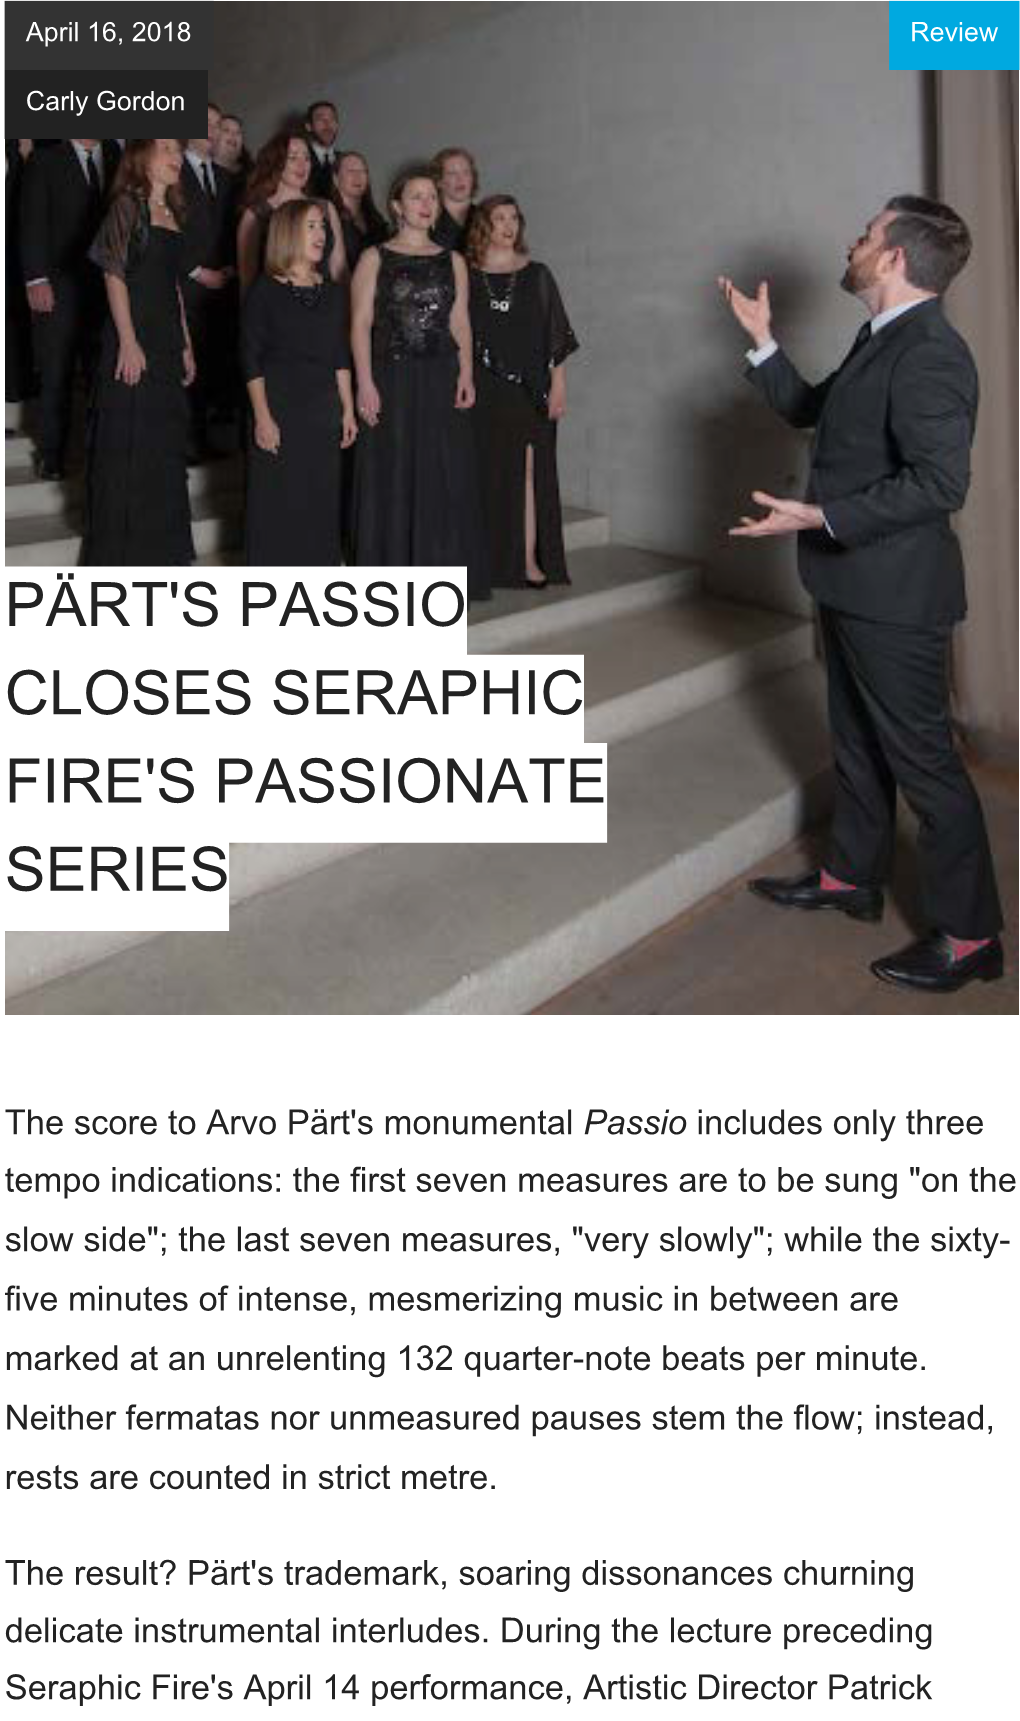 Pärt's Passio Closes Seraphic Fire's Passionate Series